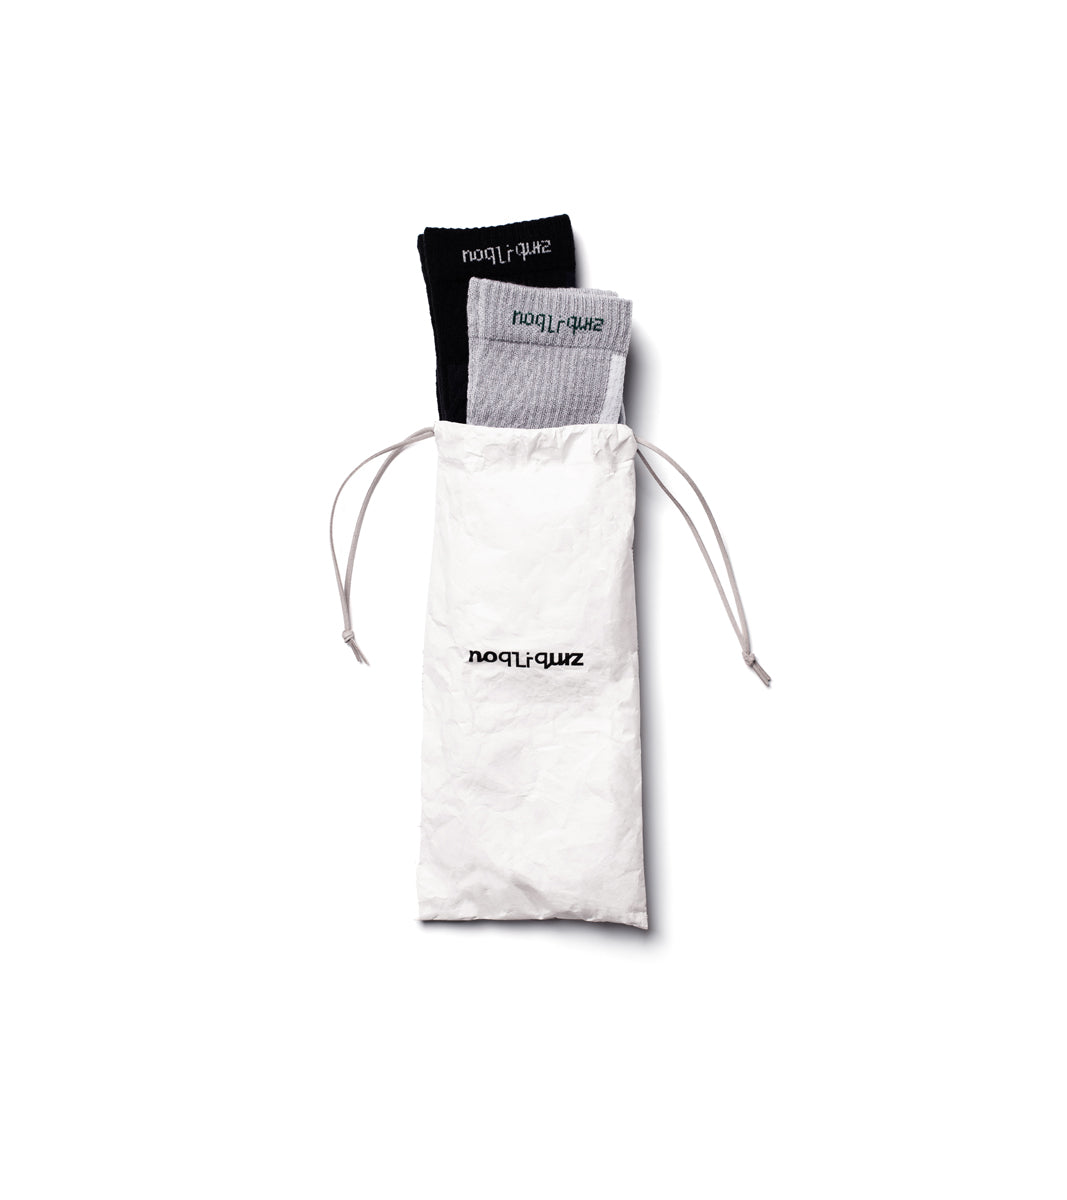 Tear Resistant Patch Socks (2pack)